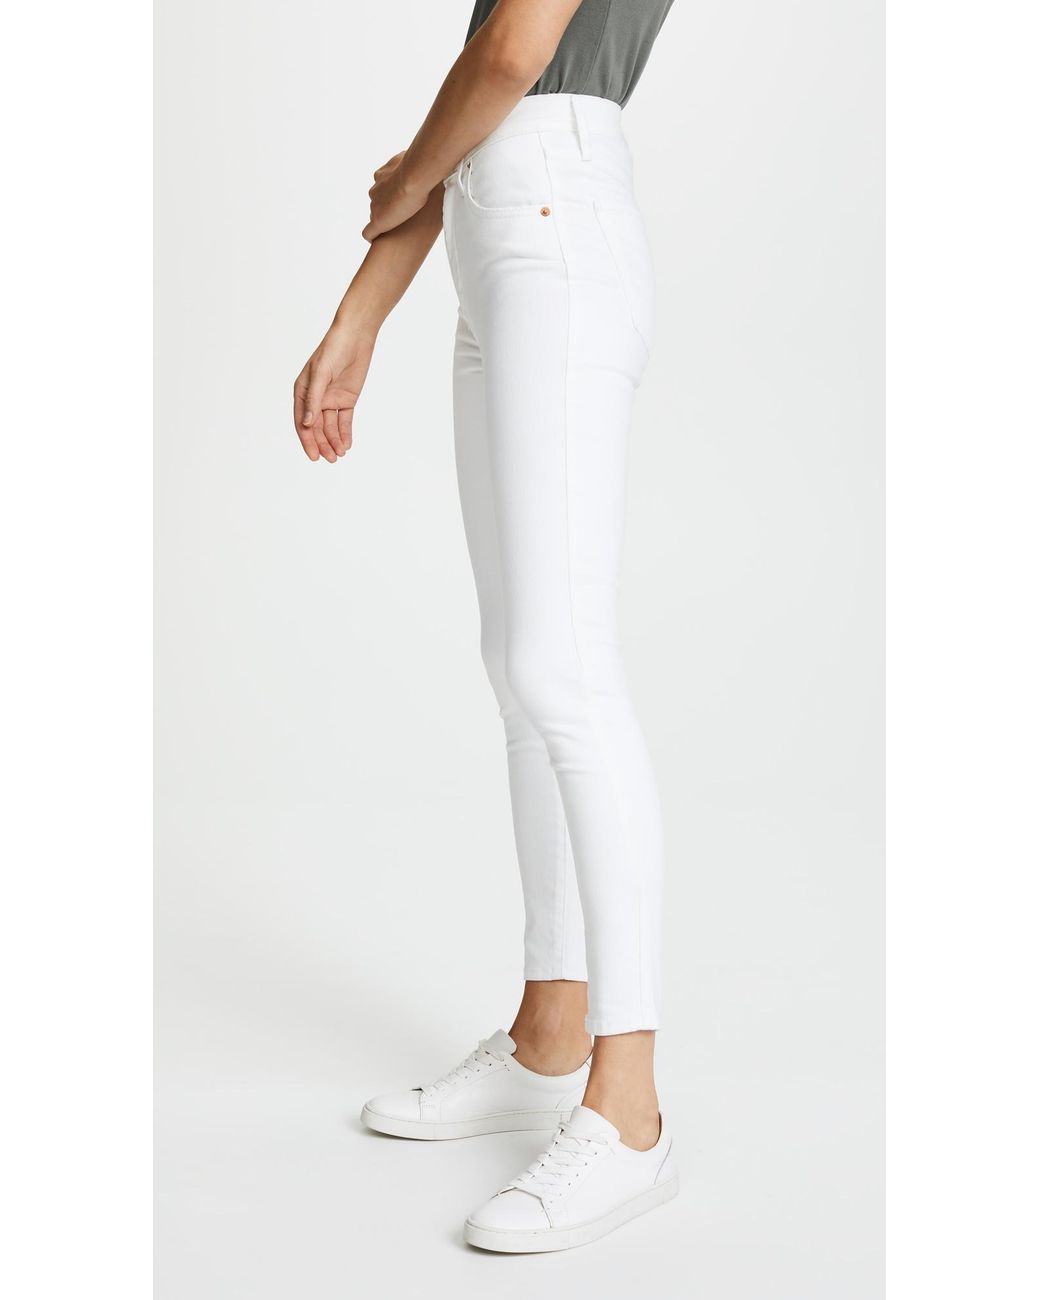 Levi's Denim Mile High Ankle Super Skinny Jeans in White | Lyst